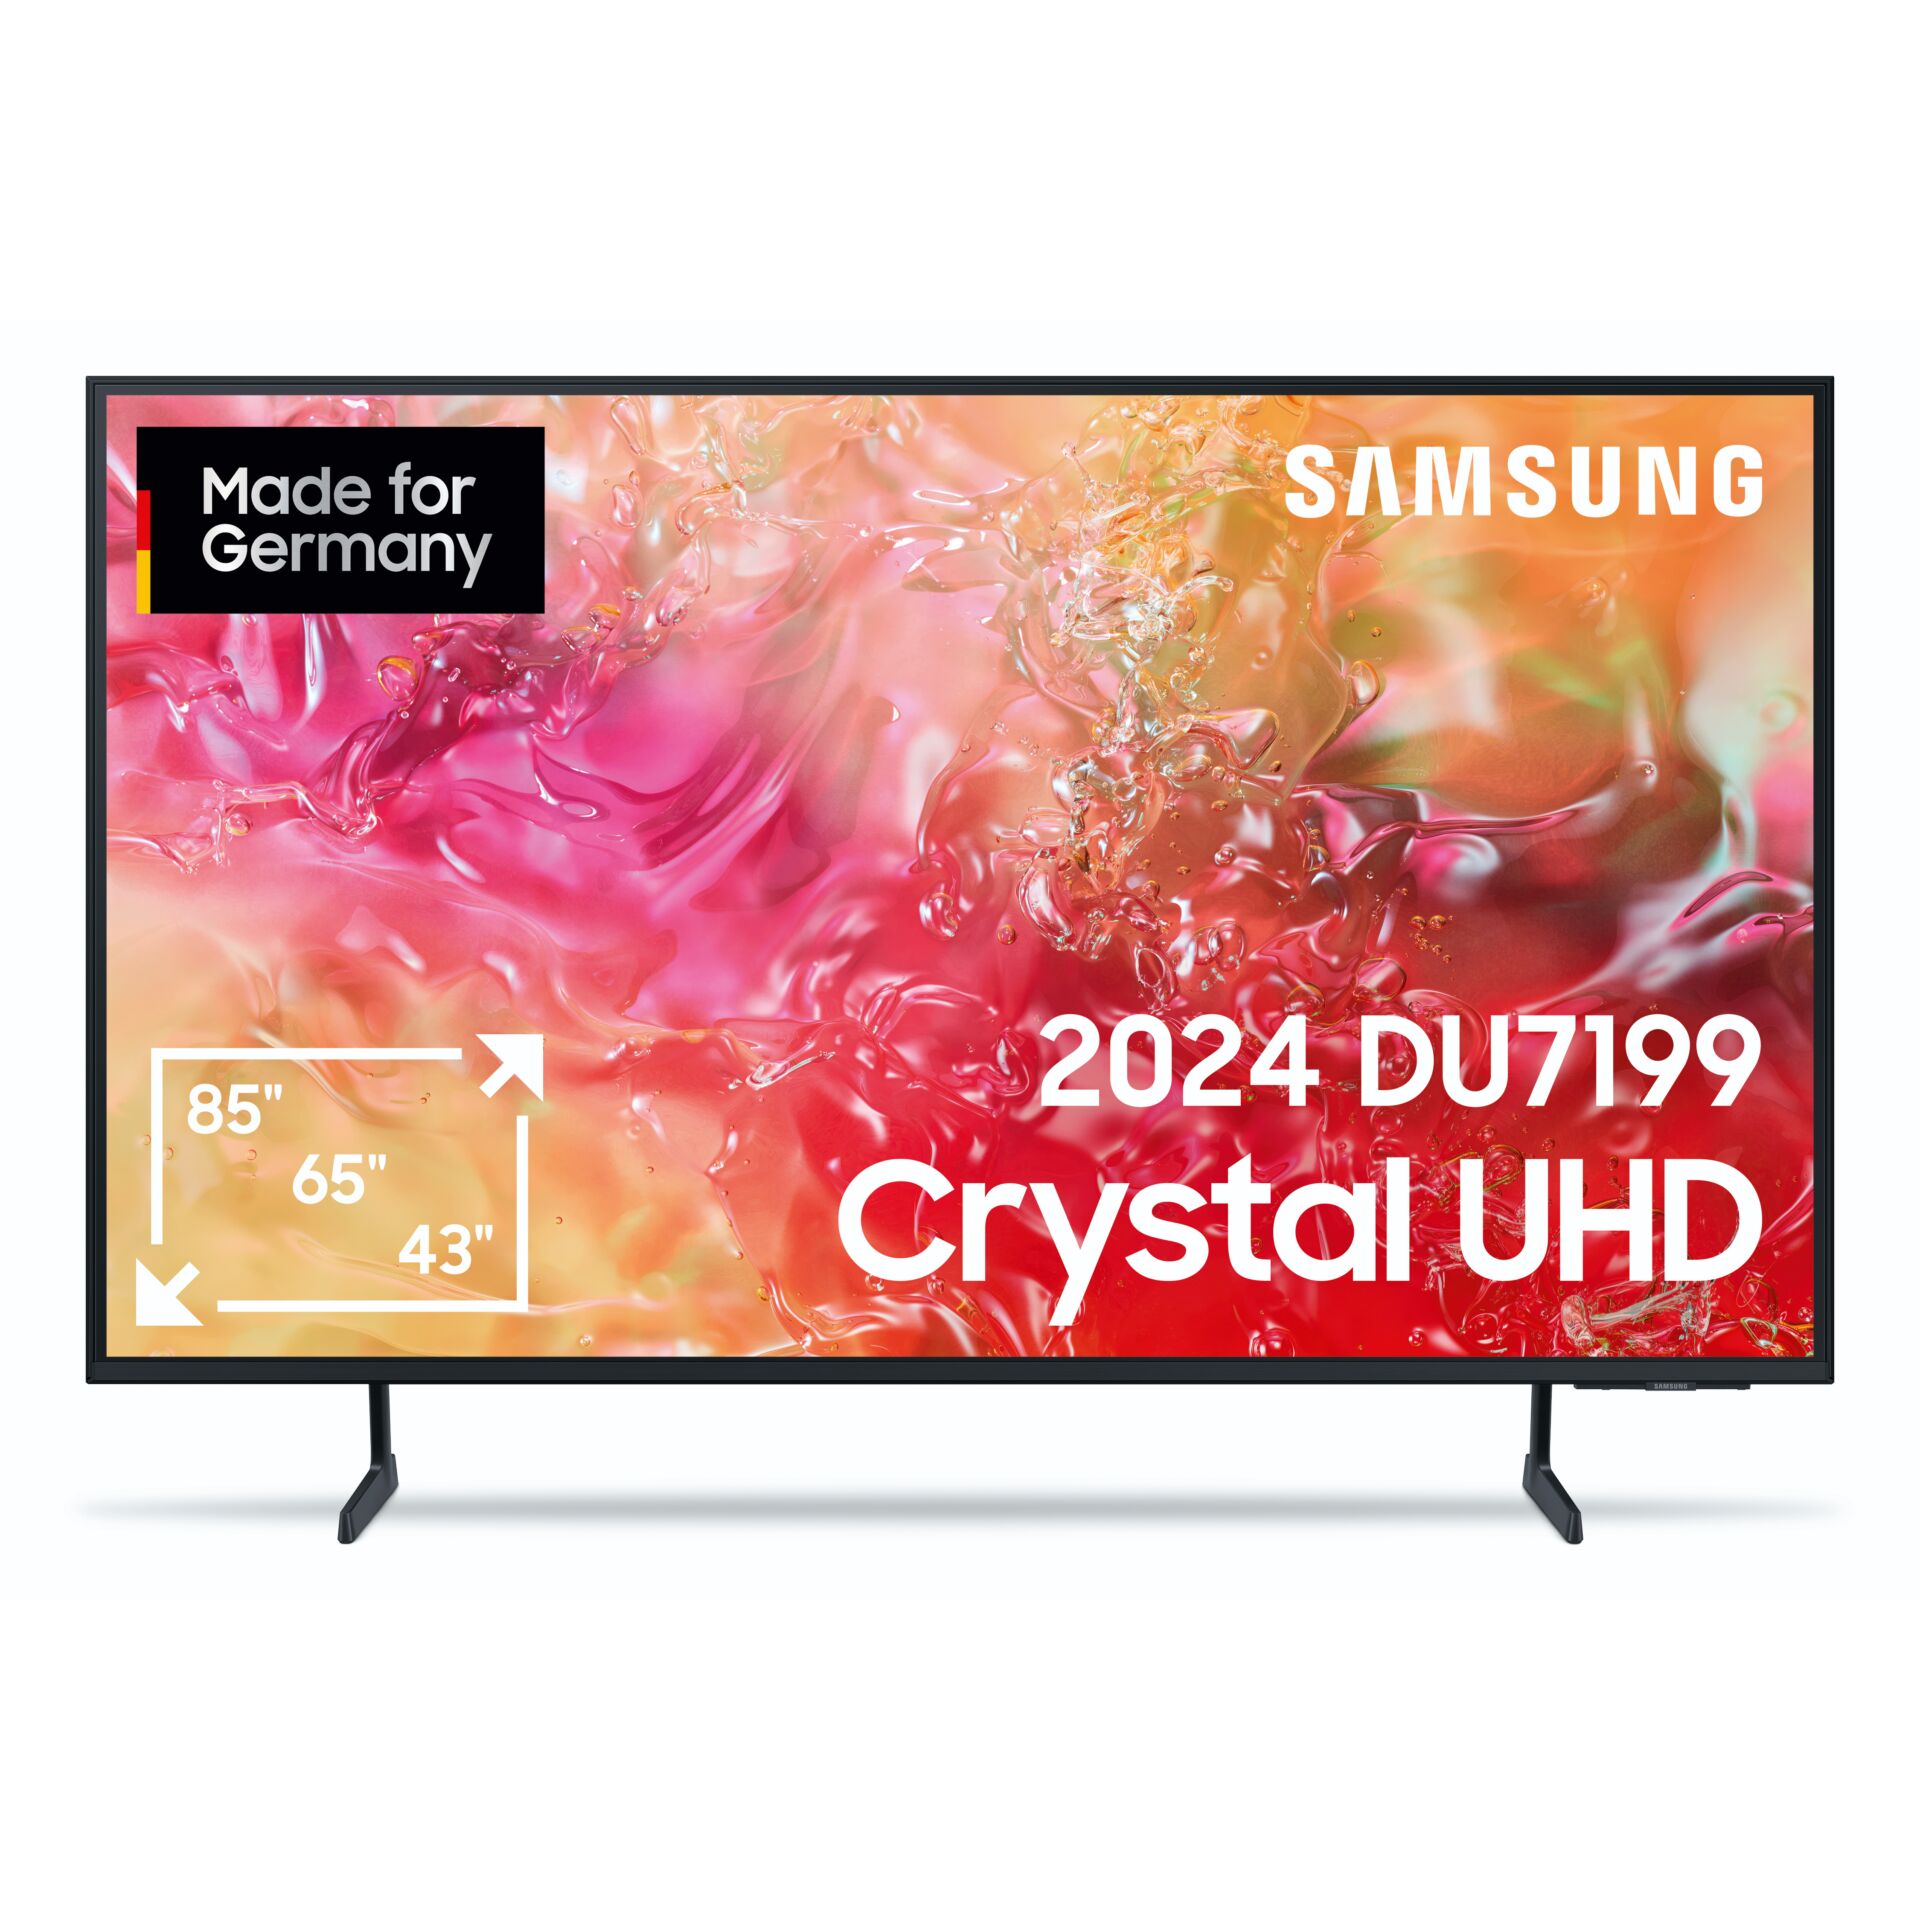 Samsung 55 Crystal UHD 4K DU7199 Tizen OS Smart TV (2024)